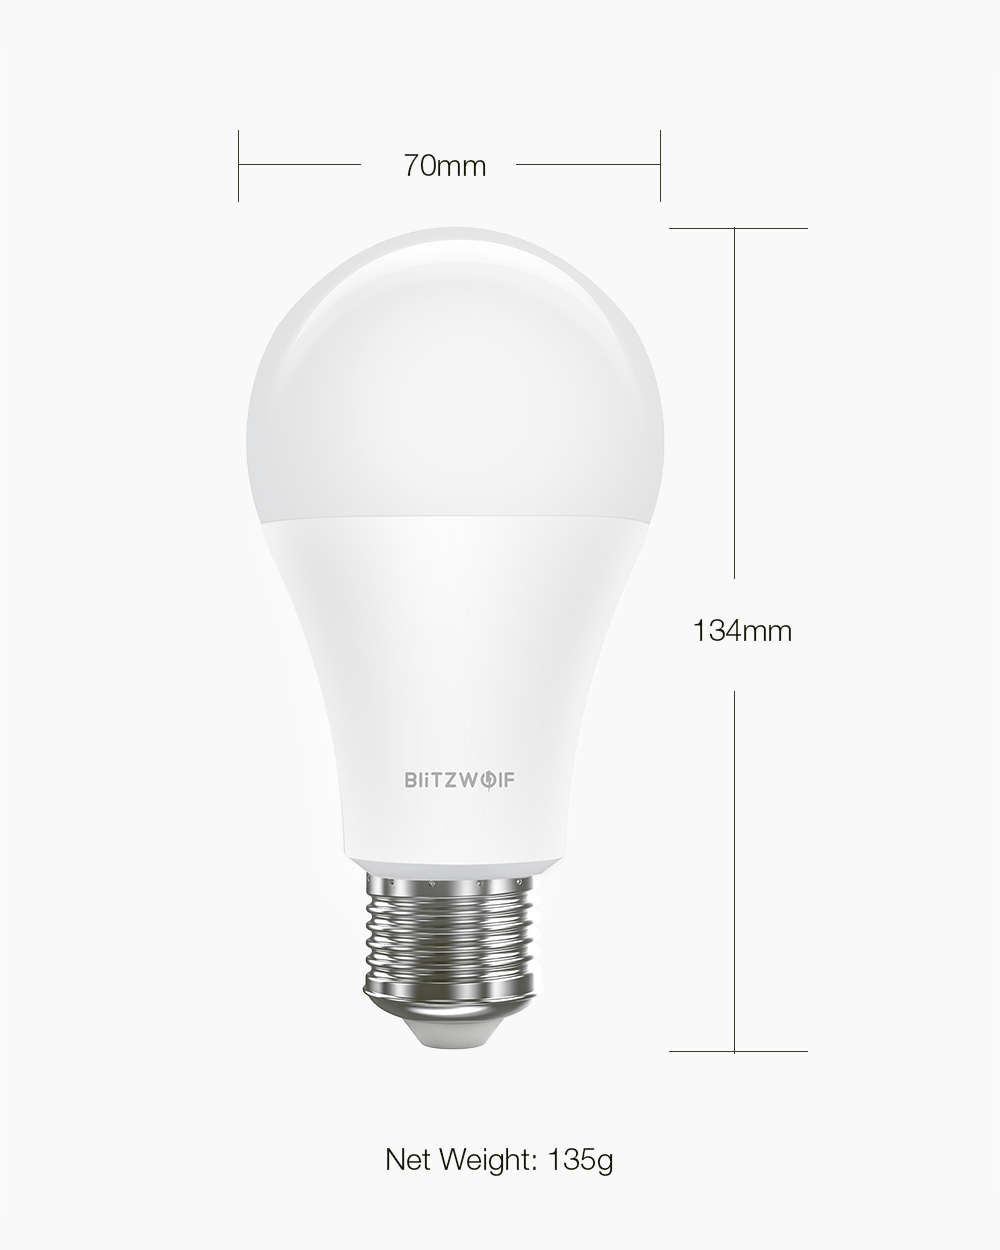 BlitzWolf® BW-LT21 RGBWW 10W E27 APP Smart LED Light Bulb Work With Amazon Alexa Google Assistant AC100-240V